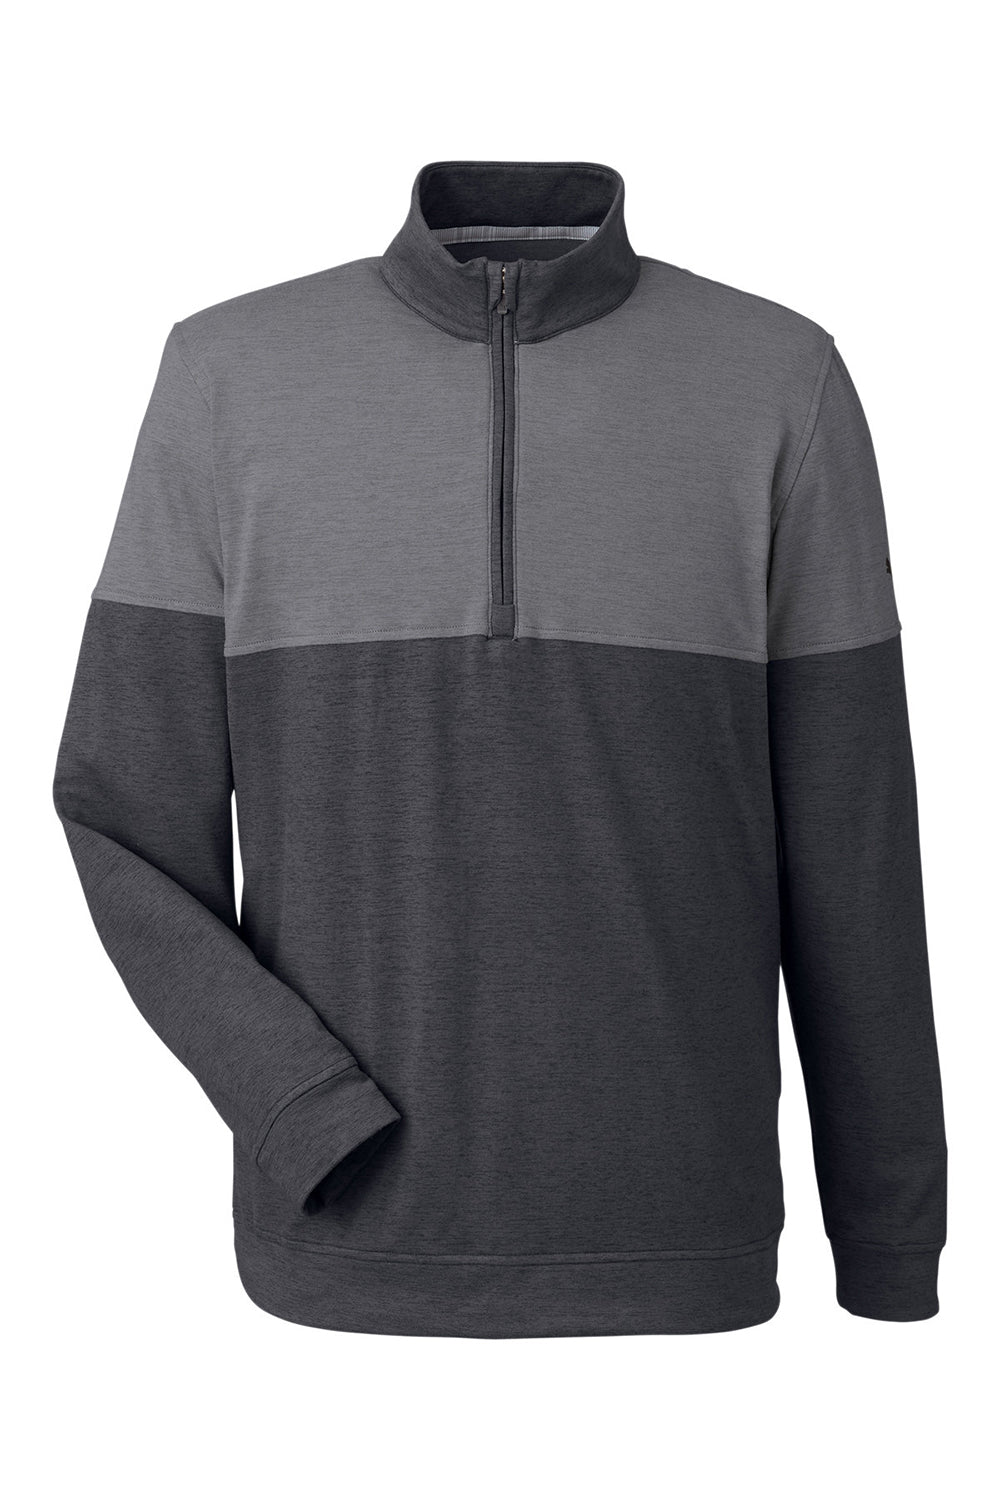 Puma 595803 Mens Cloudspun Warm Up 1/4 Zip Sweatshirt Black/Quiet Shade Grey Flat Front